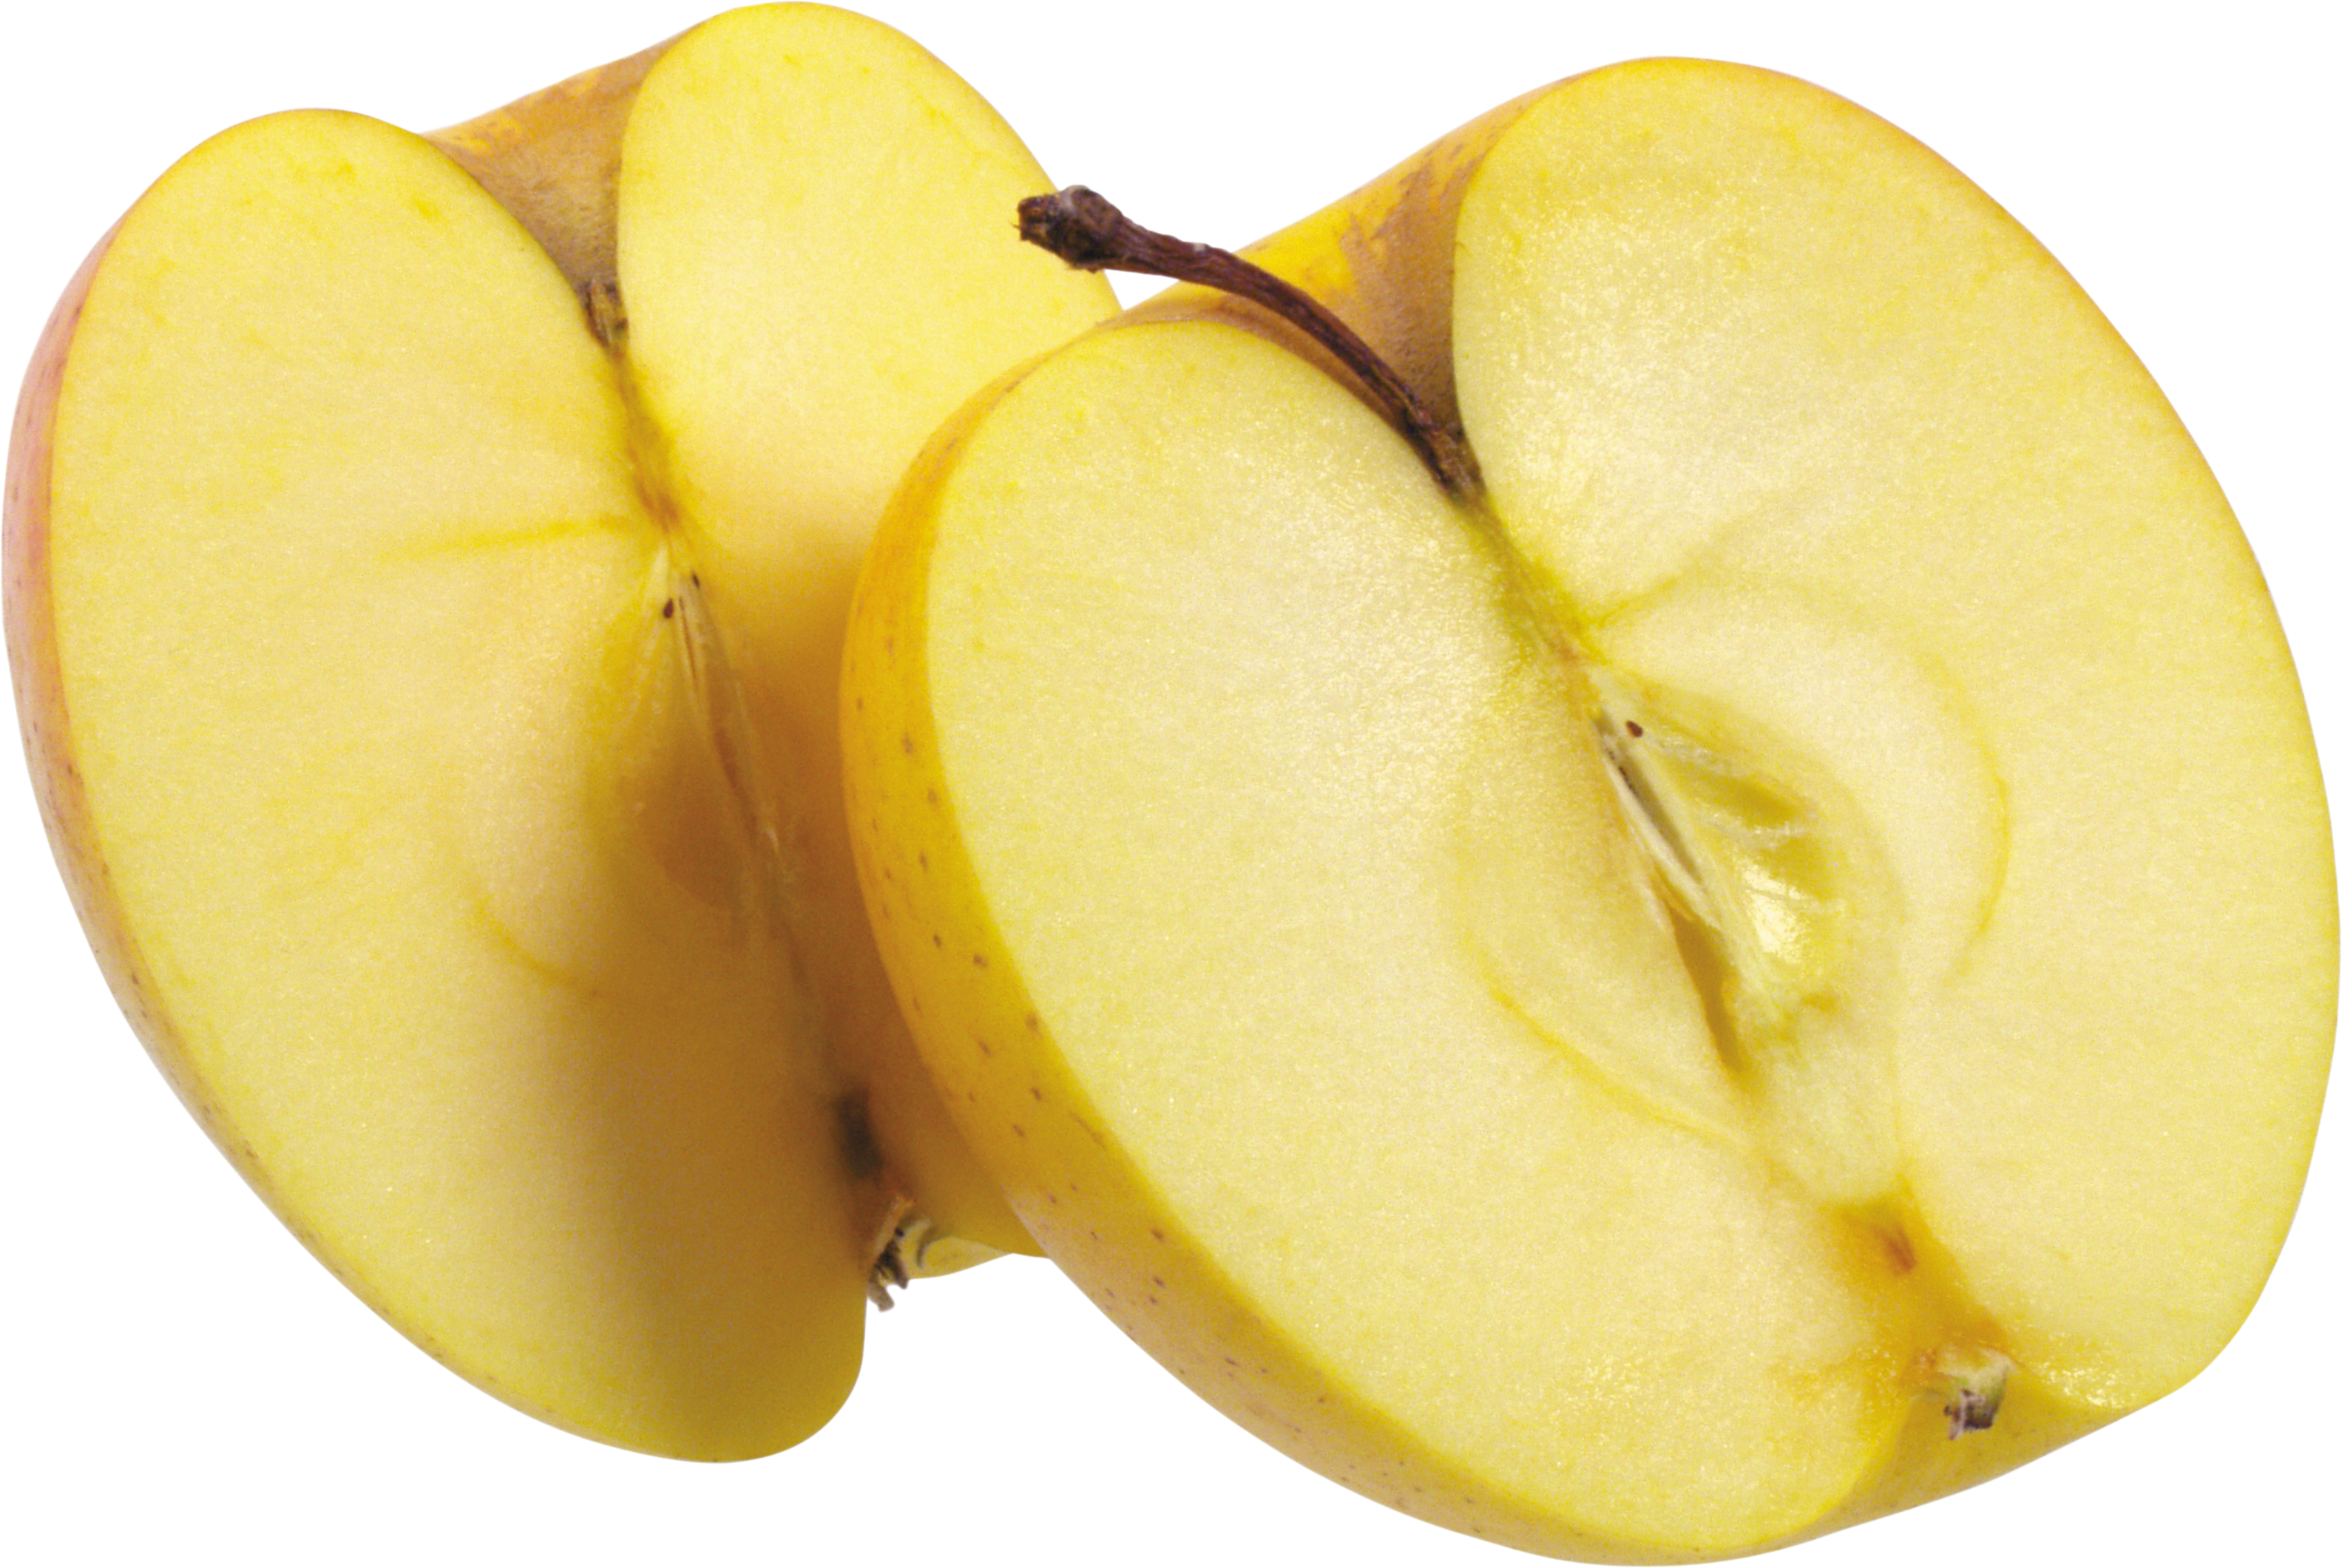 Yellow Apple Cut in half